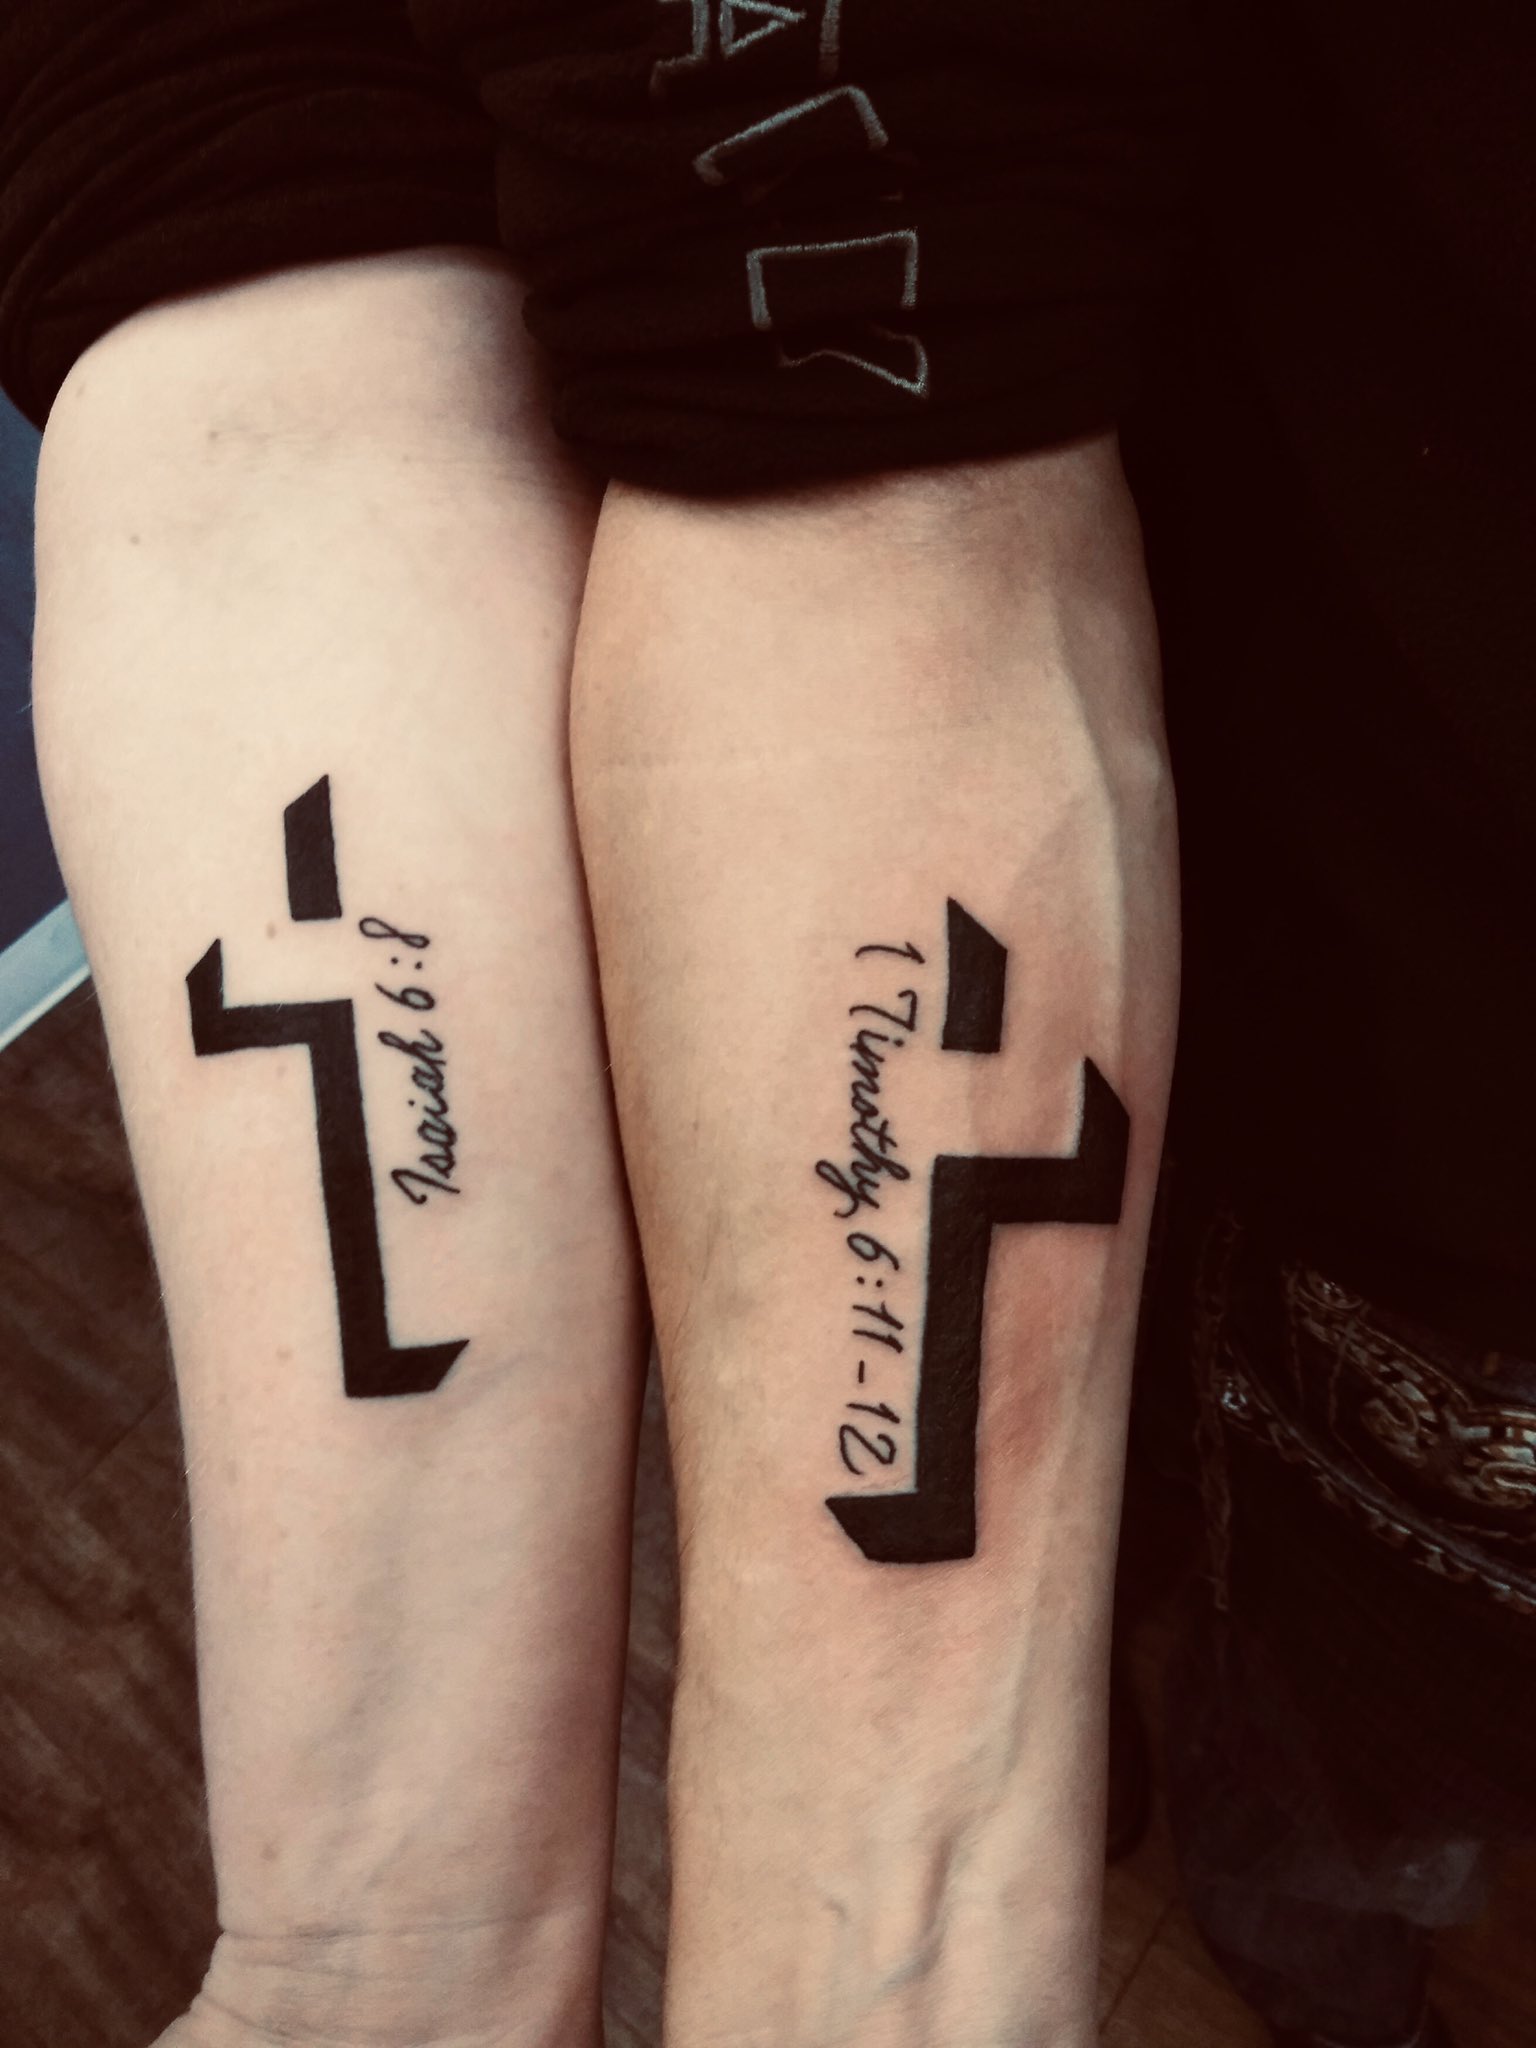 25 Inspiring Bible Verse Tattoos  Tattoo Me Now